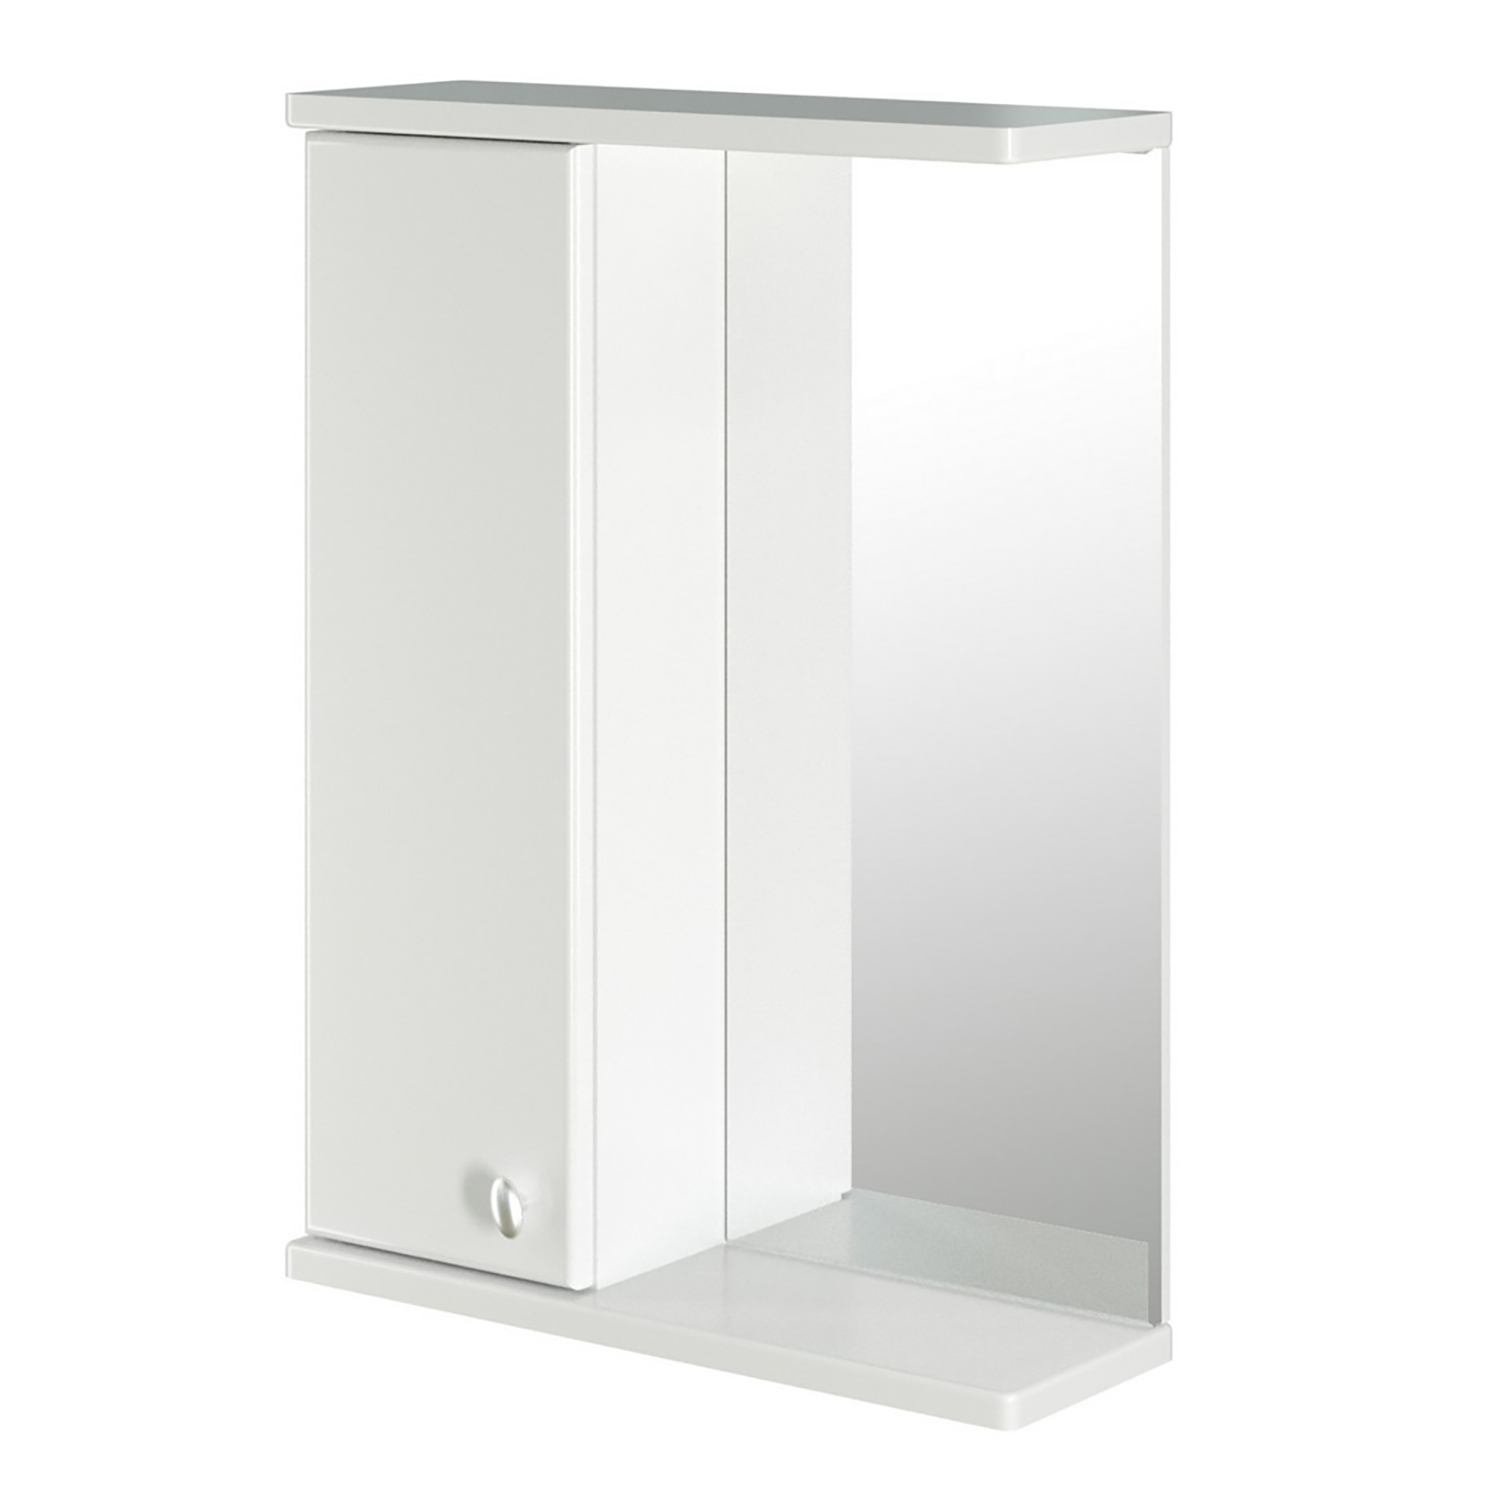 Шкаф зеркальный Mixline Норд-55 левый, белый, без подсветки шкаф норд line шк 800